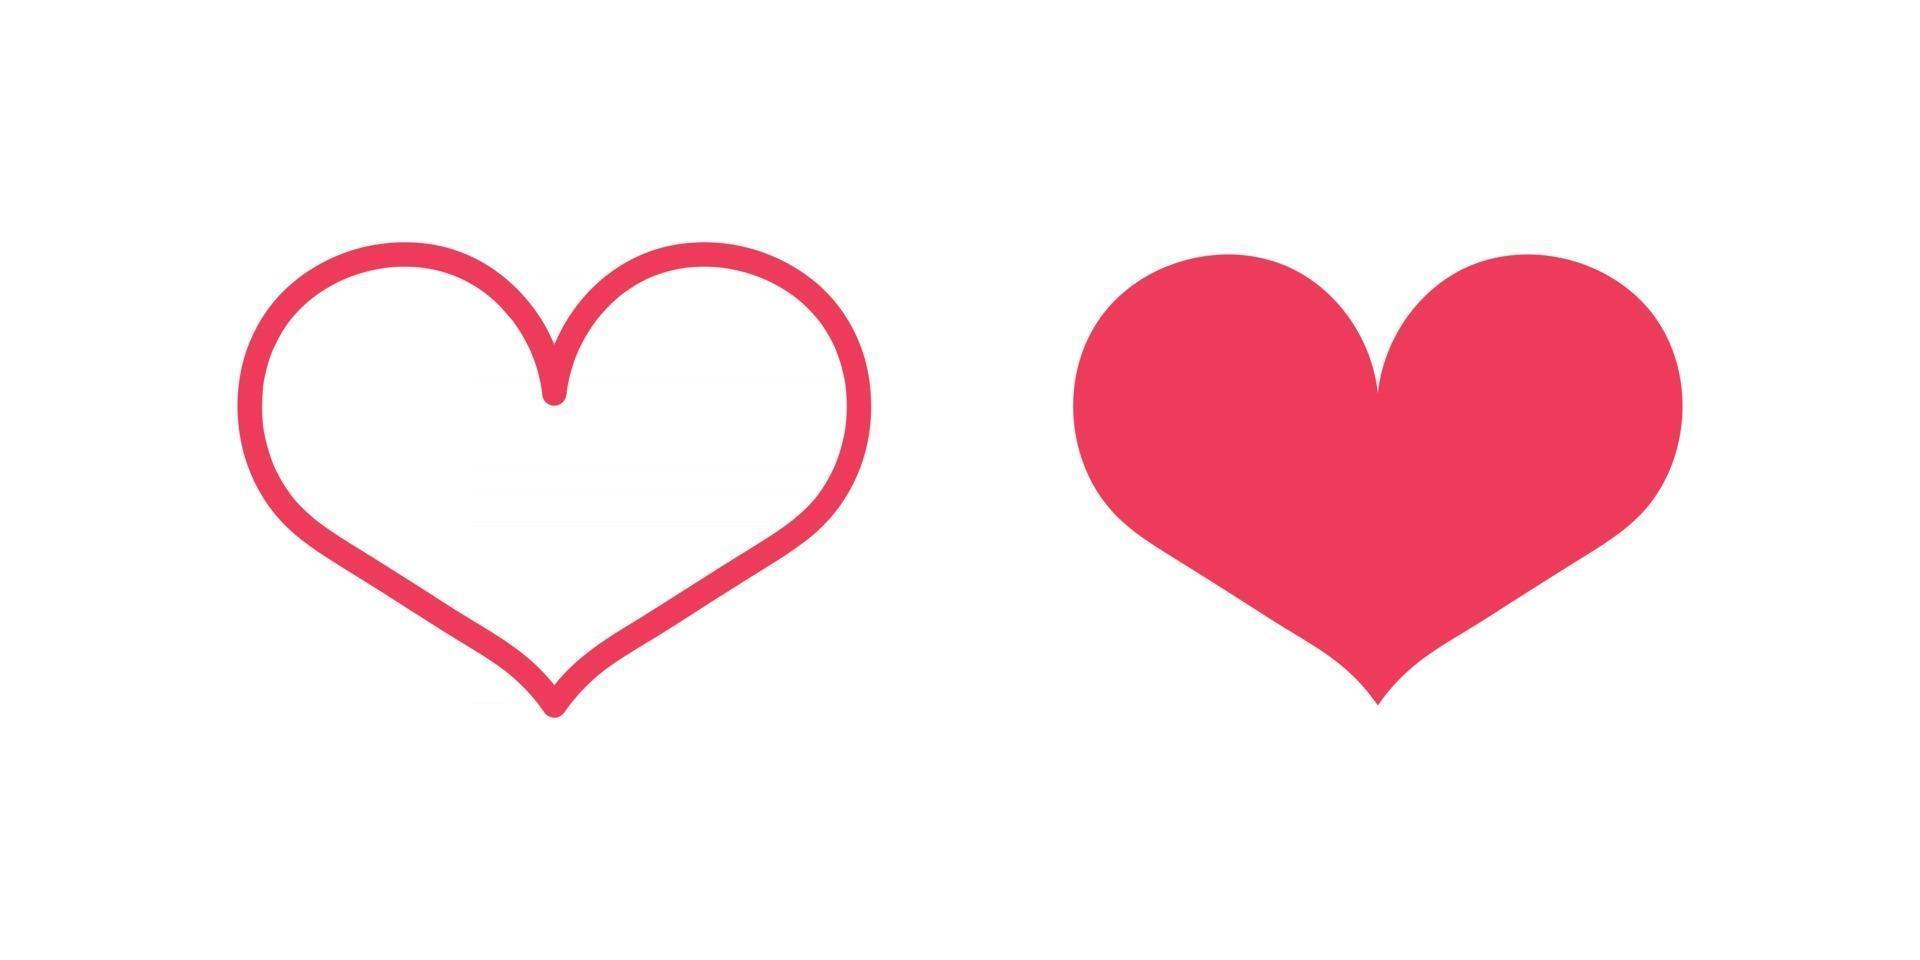 Heart vector icon for graphic design